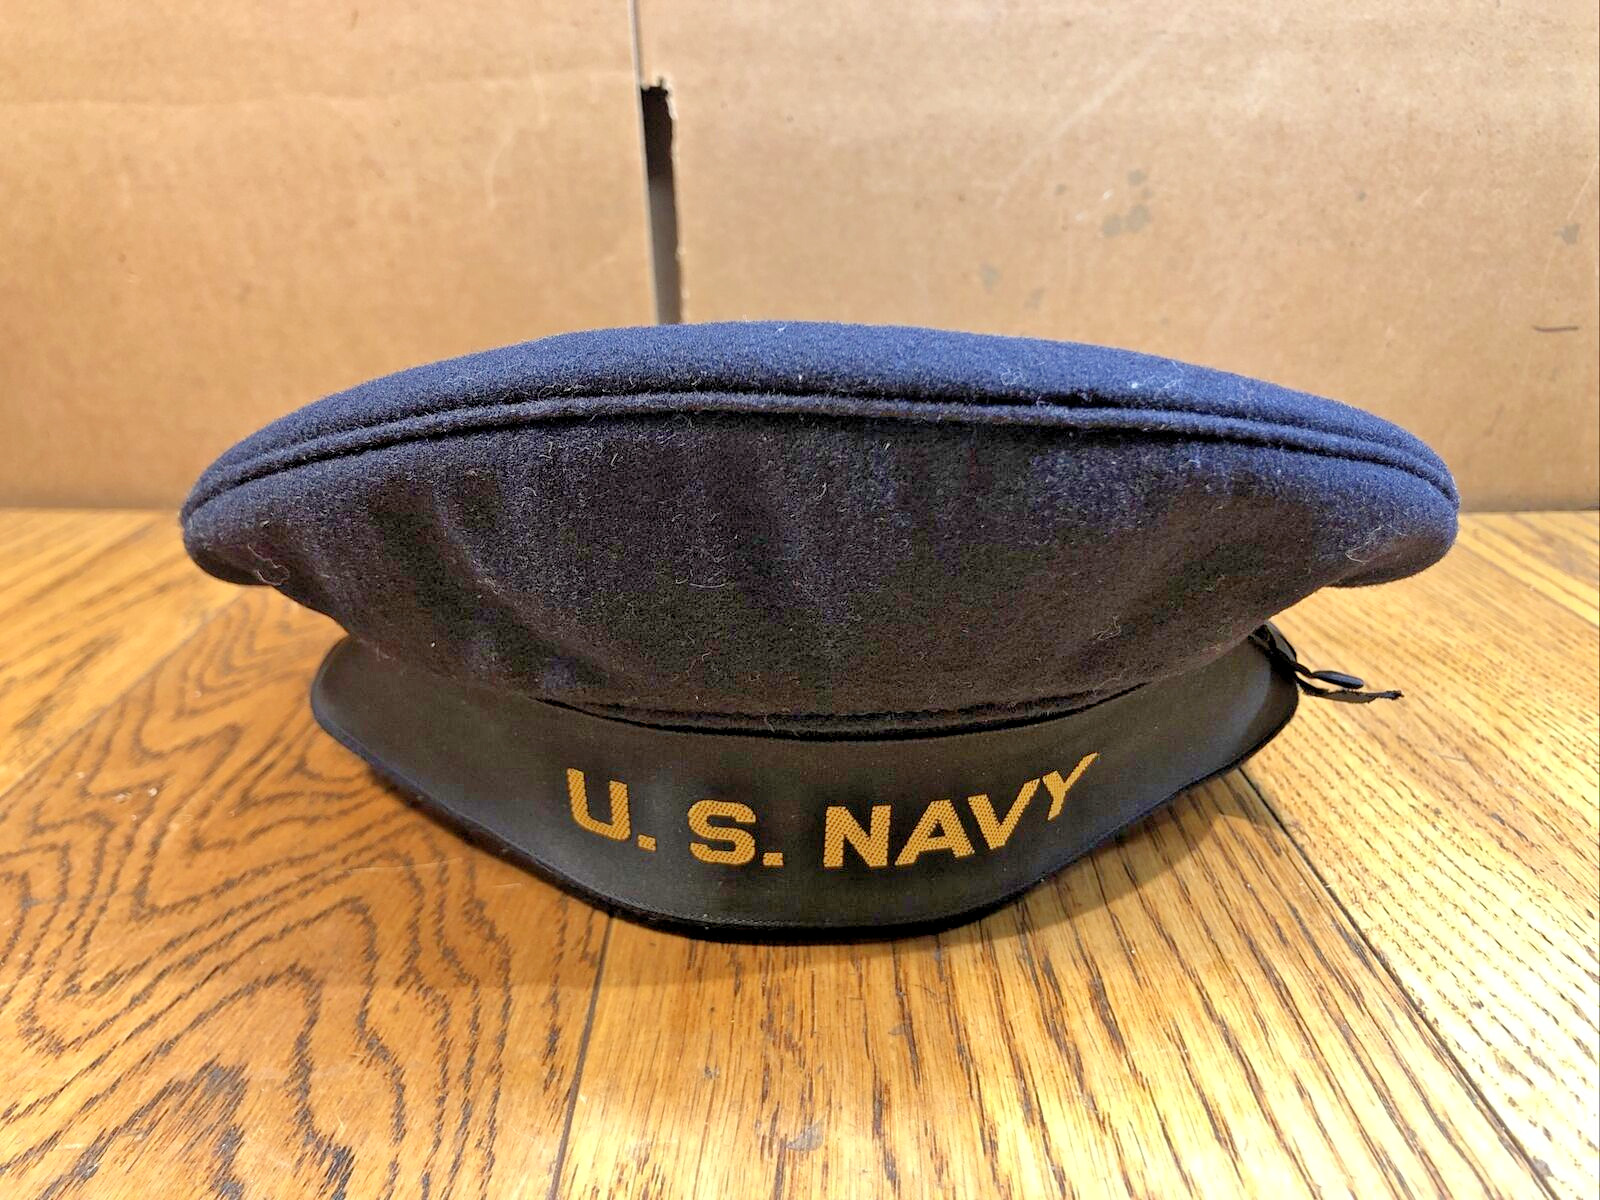 WW2 USN US Navy Enlisted Flat Donald Duck Uniform Hat Cap Beret - Size 7